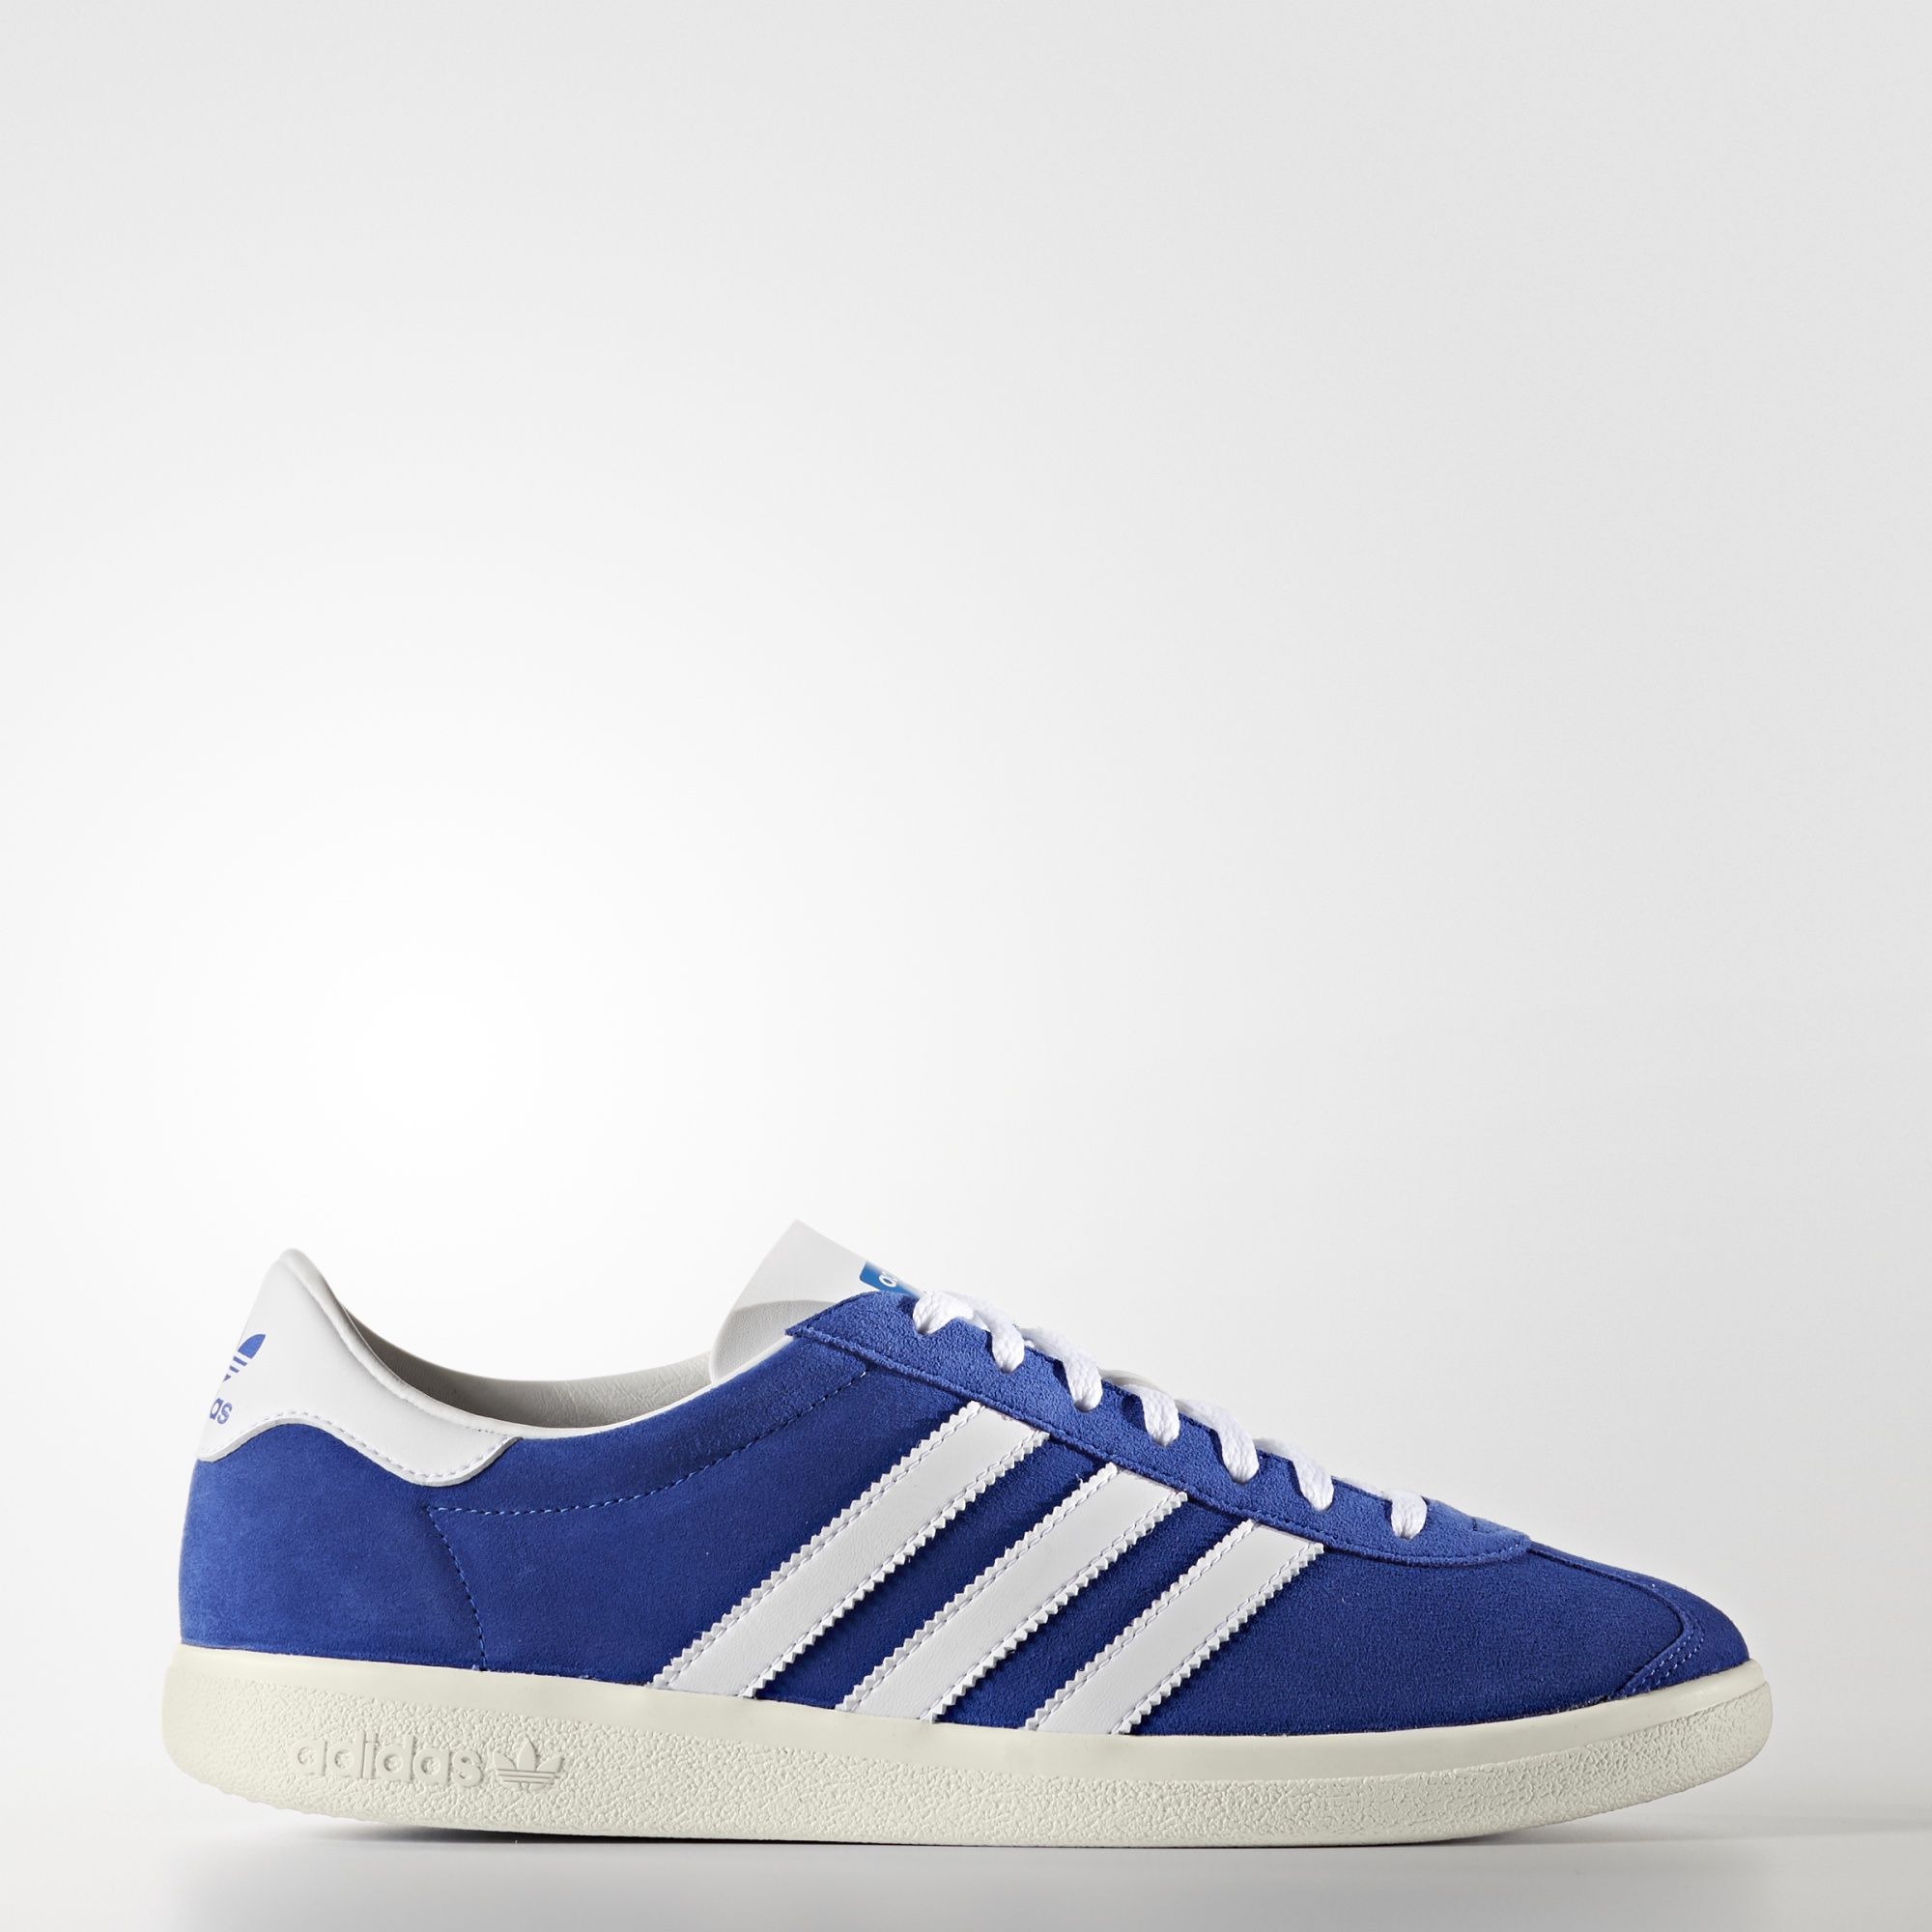 Adidas Jogger SPZL
Blue / Footwear White / Bluebird